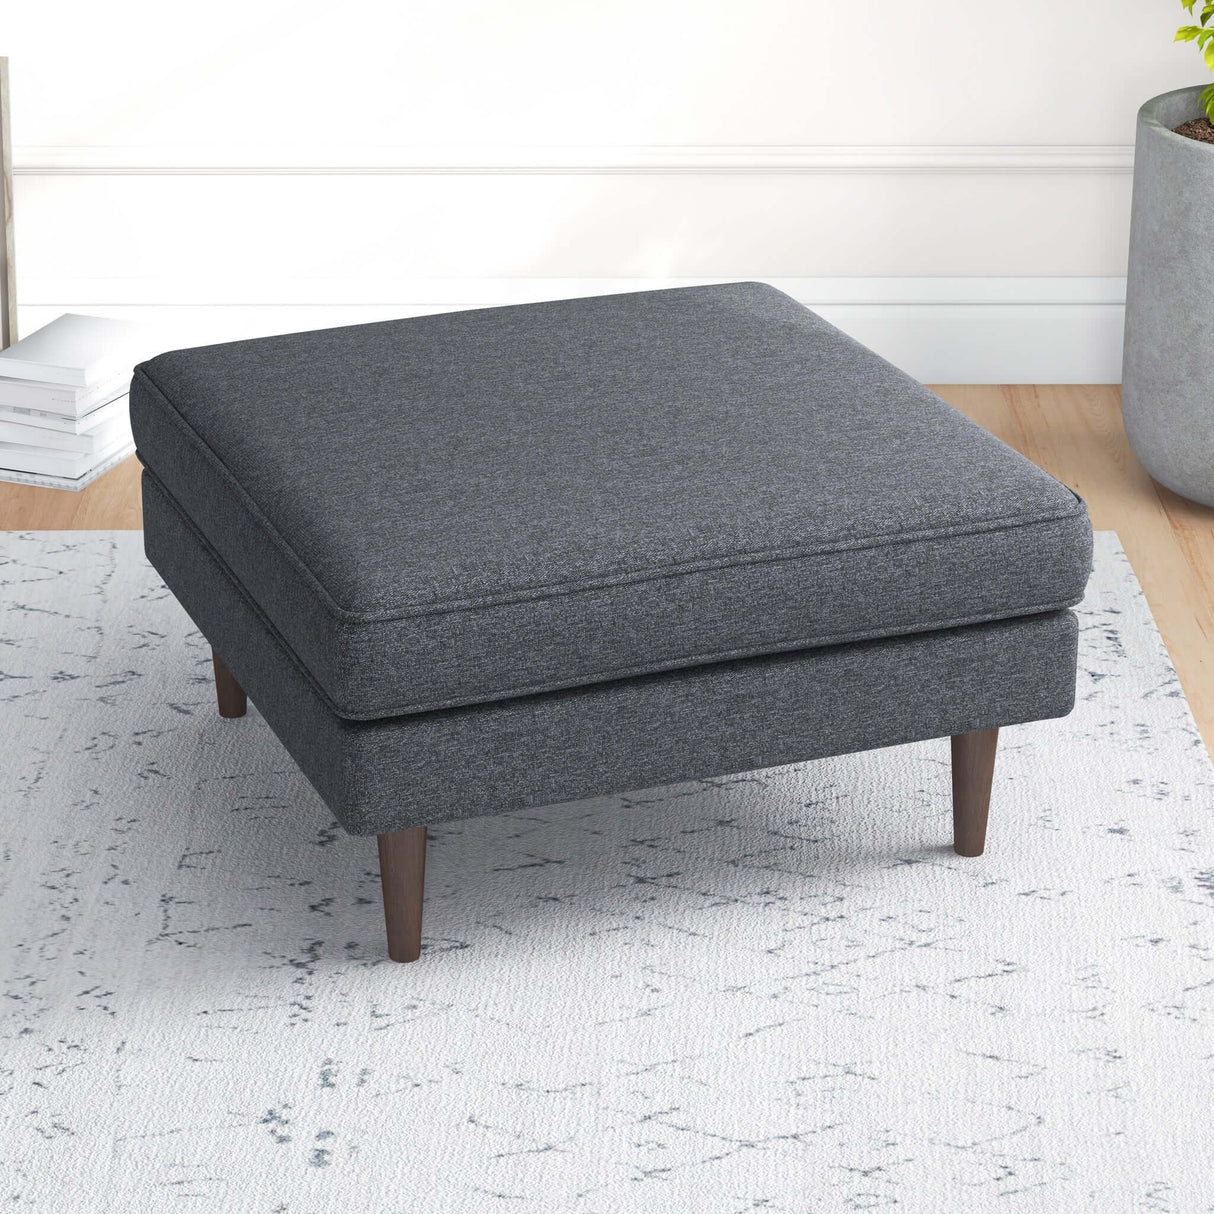 Amber Mid-Century Modern Square Upholstered Ottoman Teal Velvet - AFC00109 - Luna Furniture